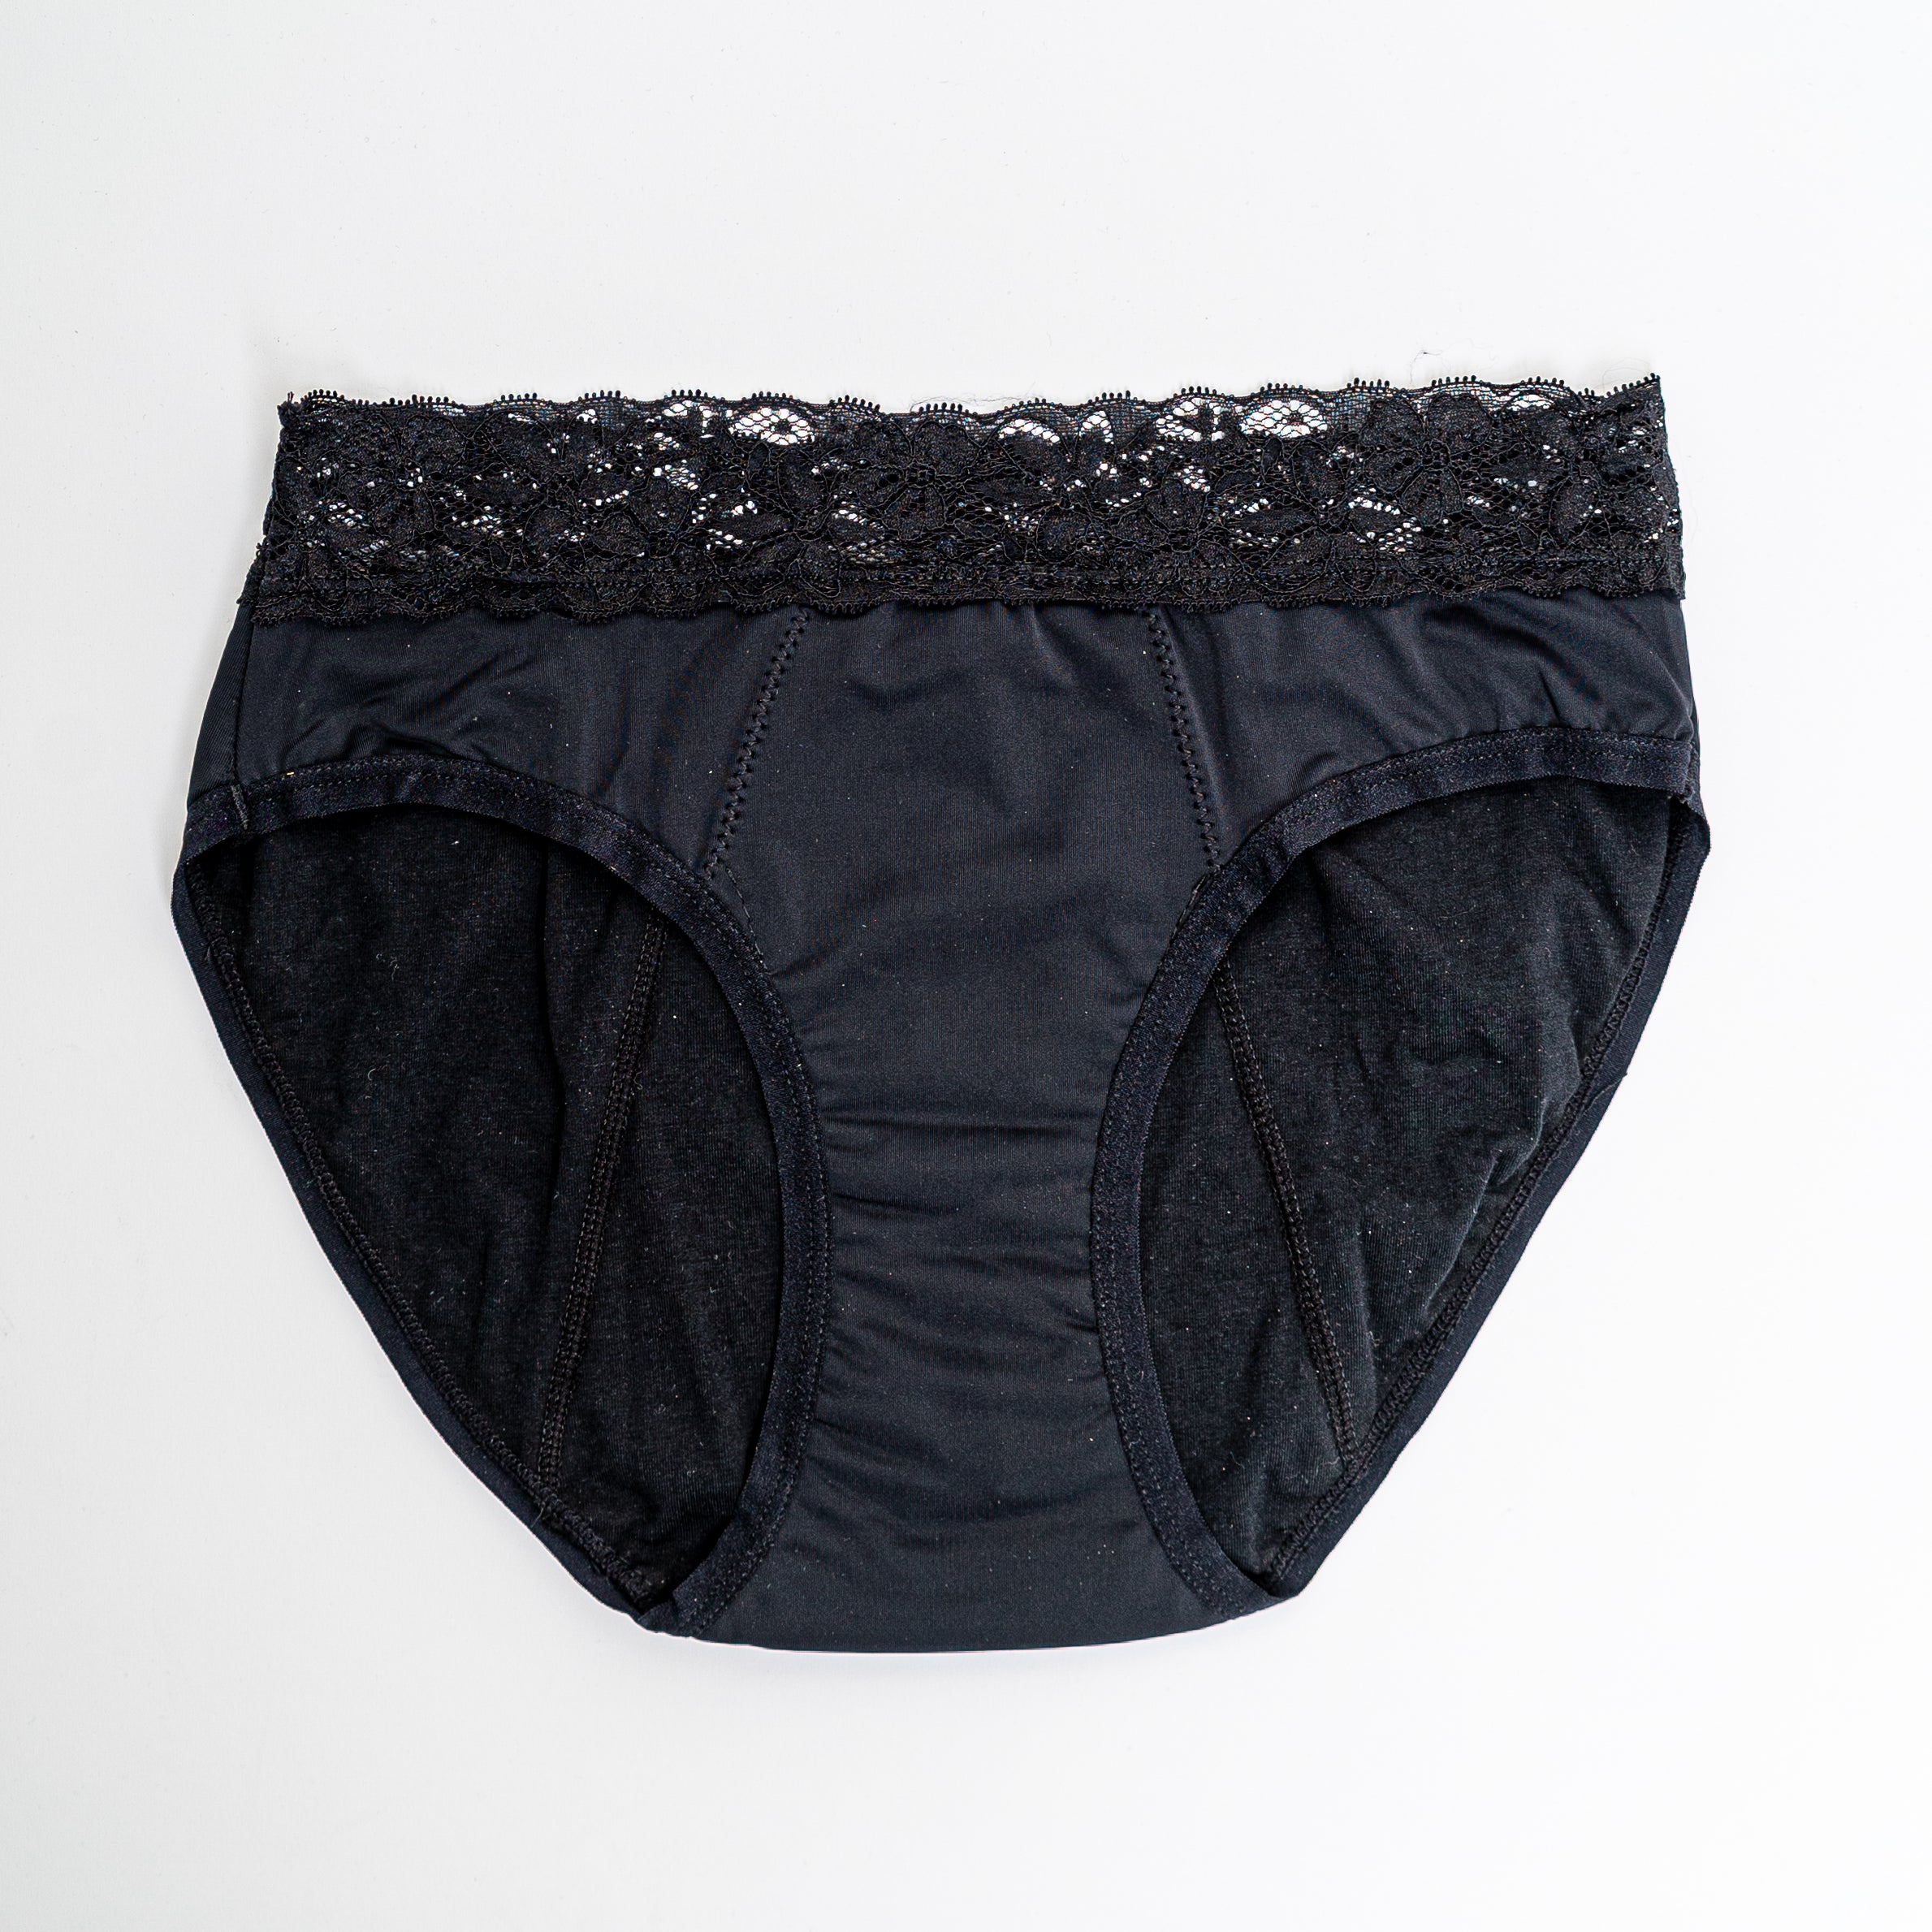 Luxe Lace Period Underwear in Starter Pack